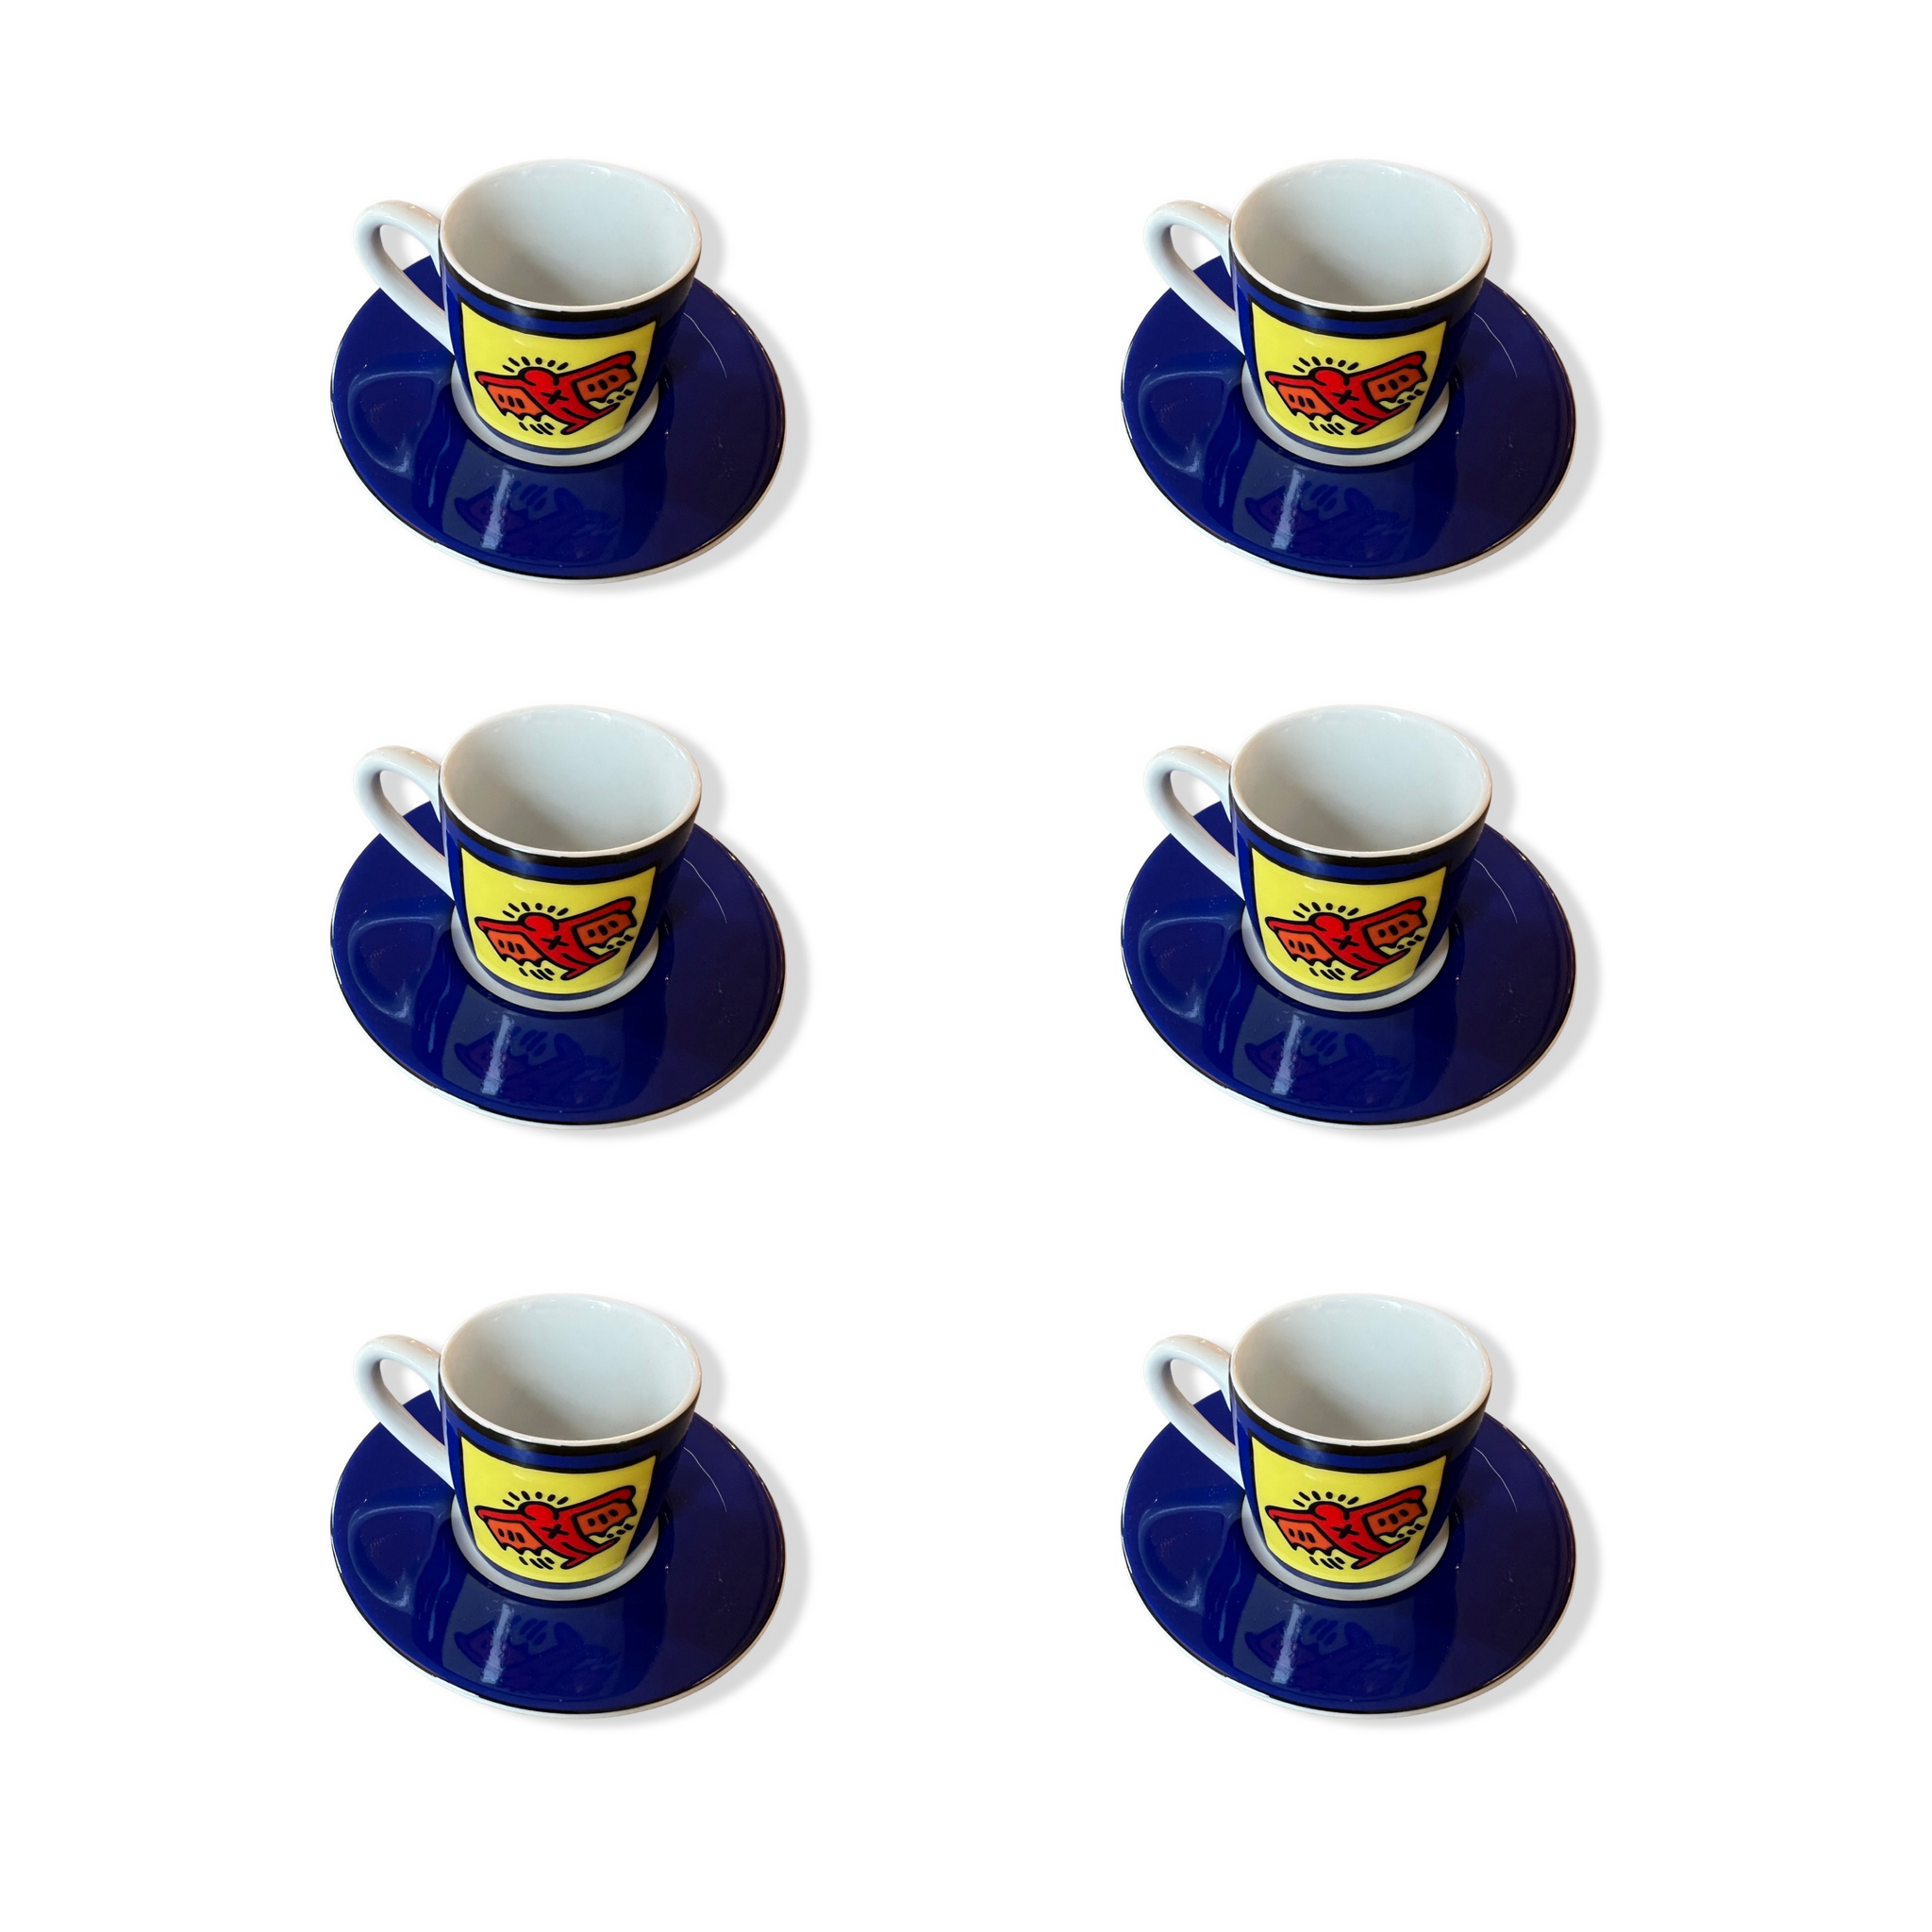 Keith Haring x Könitz - Set of 6 Espresso Cups